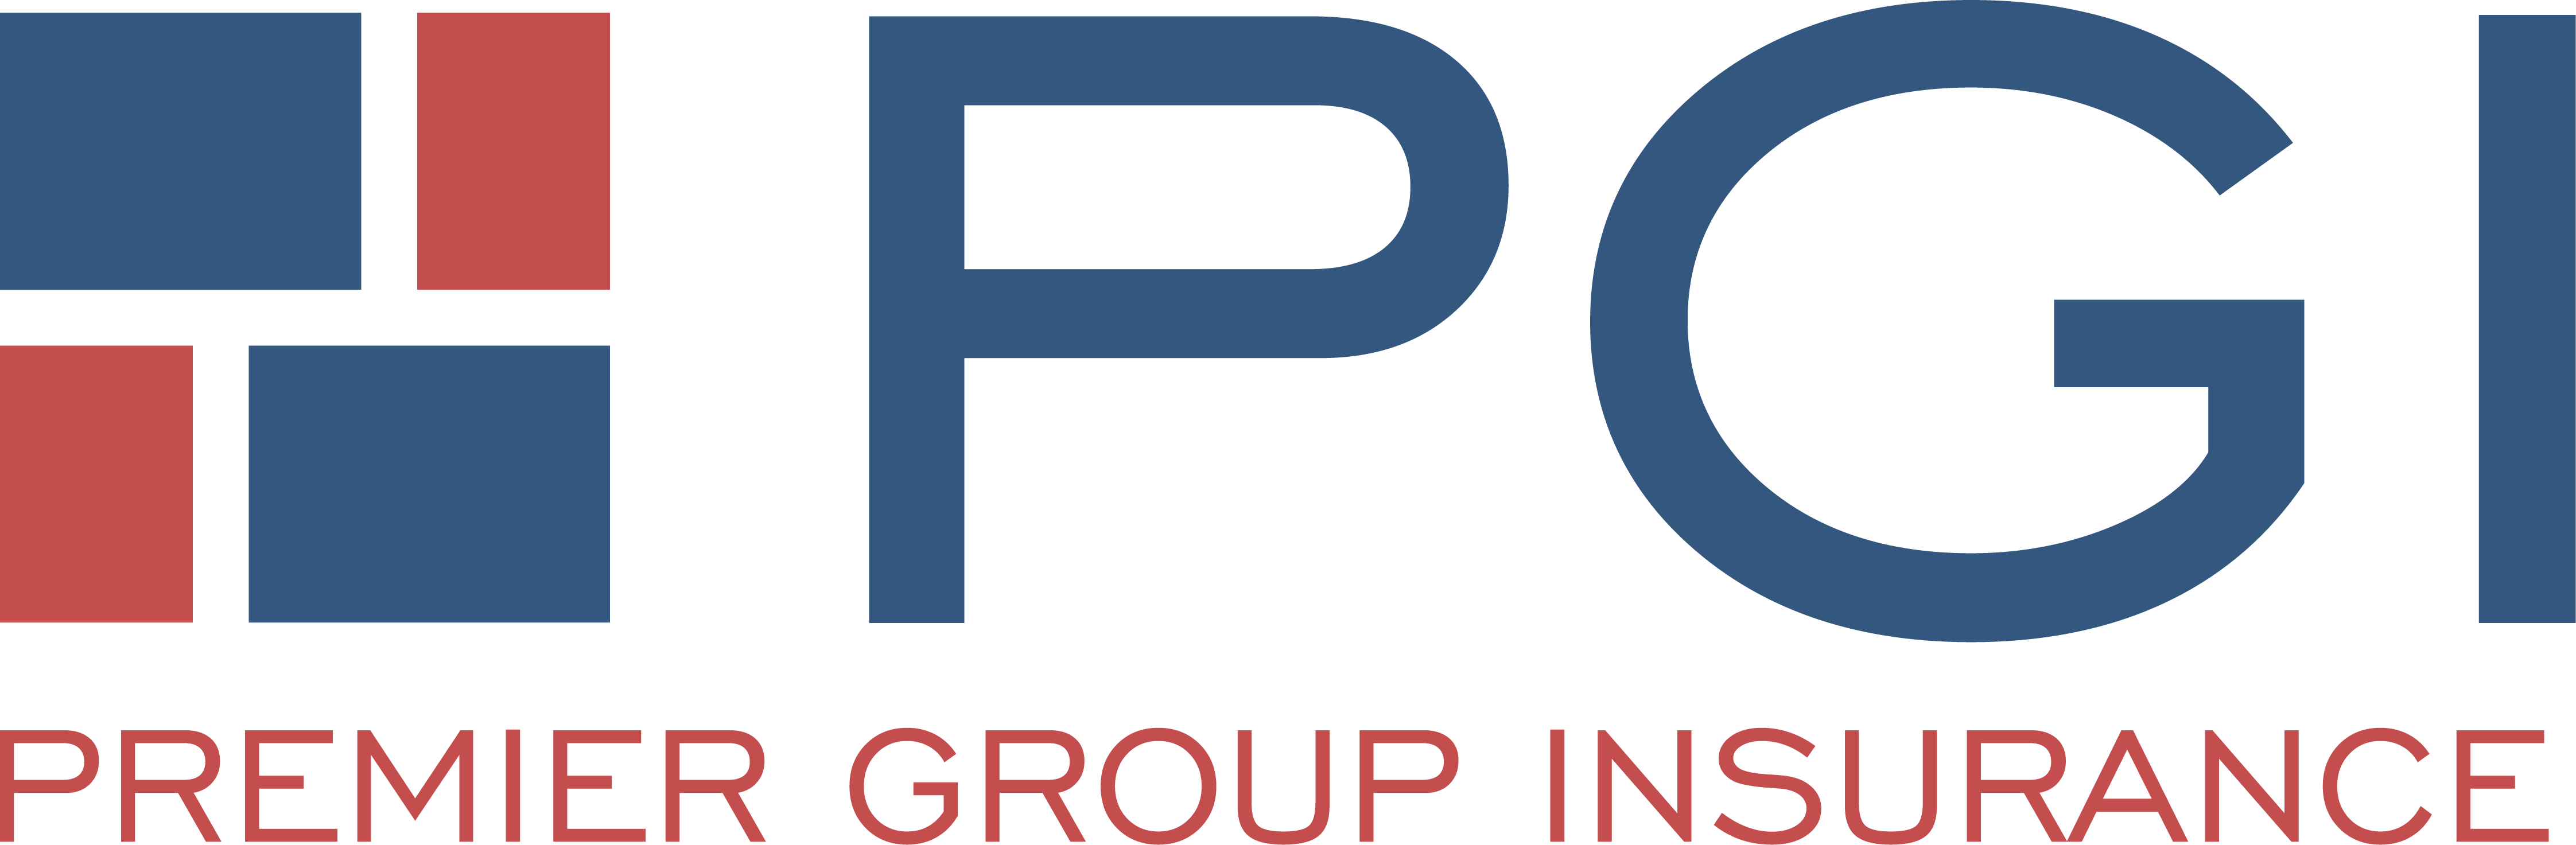 Premer Group Insurance